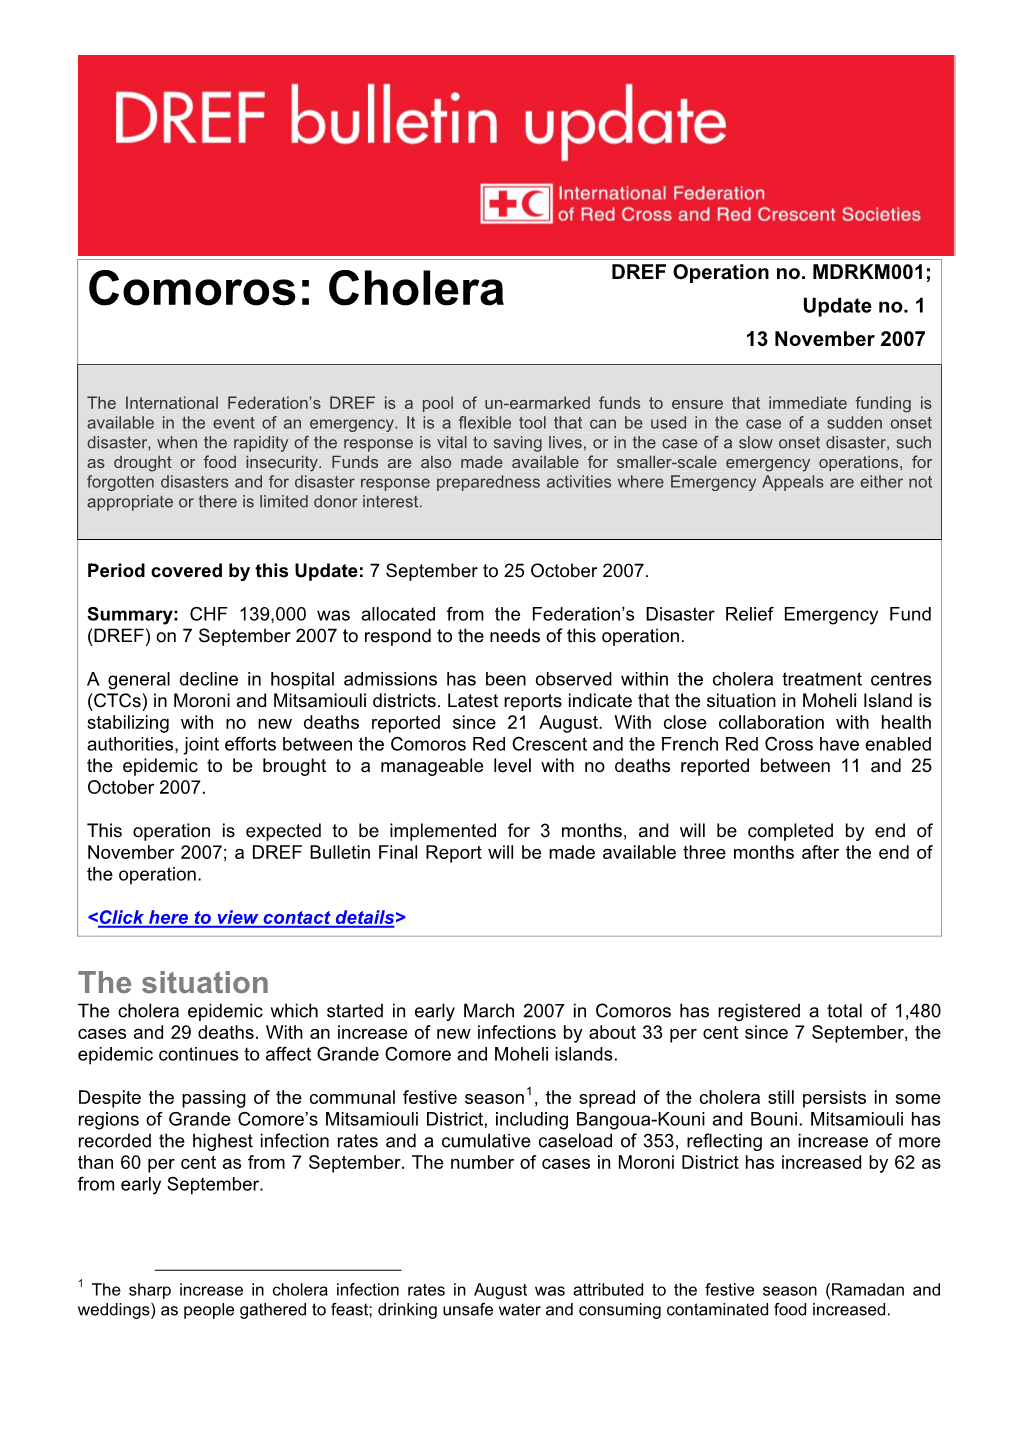 Comoros: Cholera; DREF Bulletin (MDRKM001)